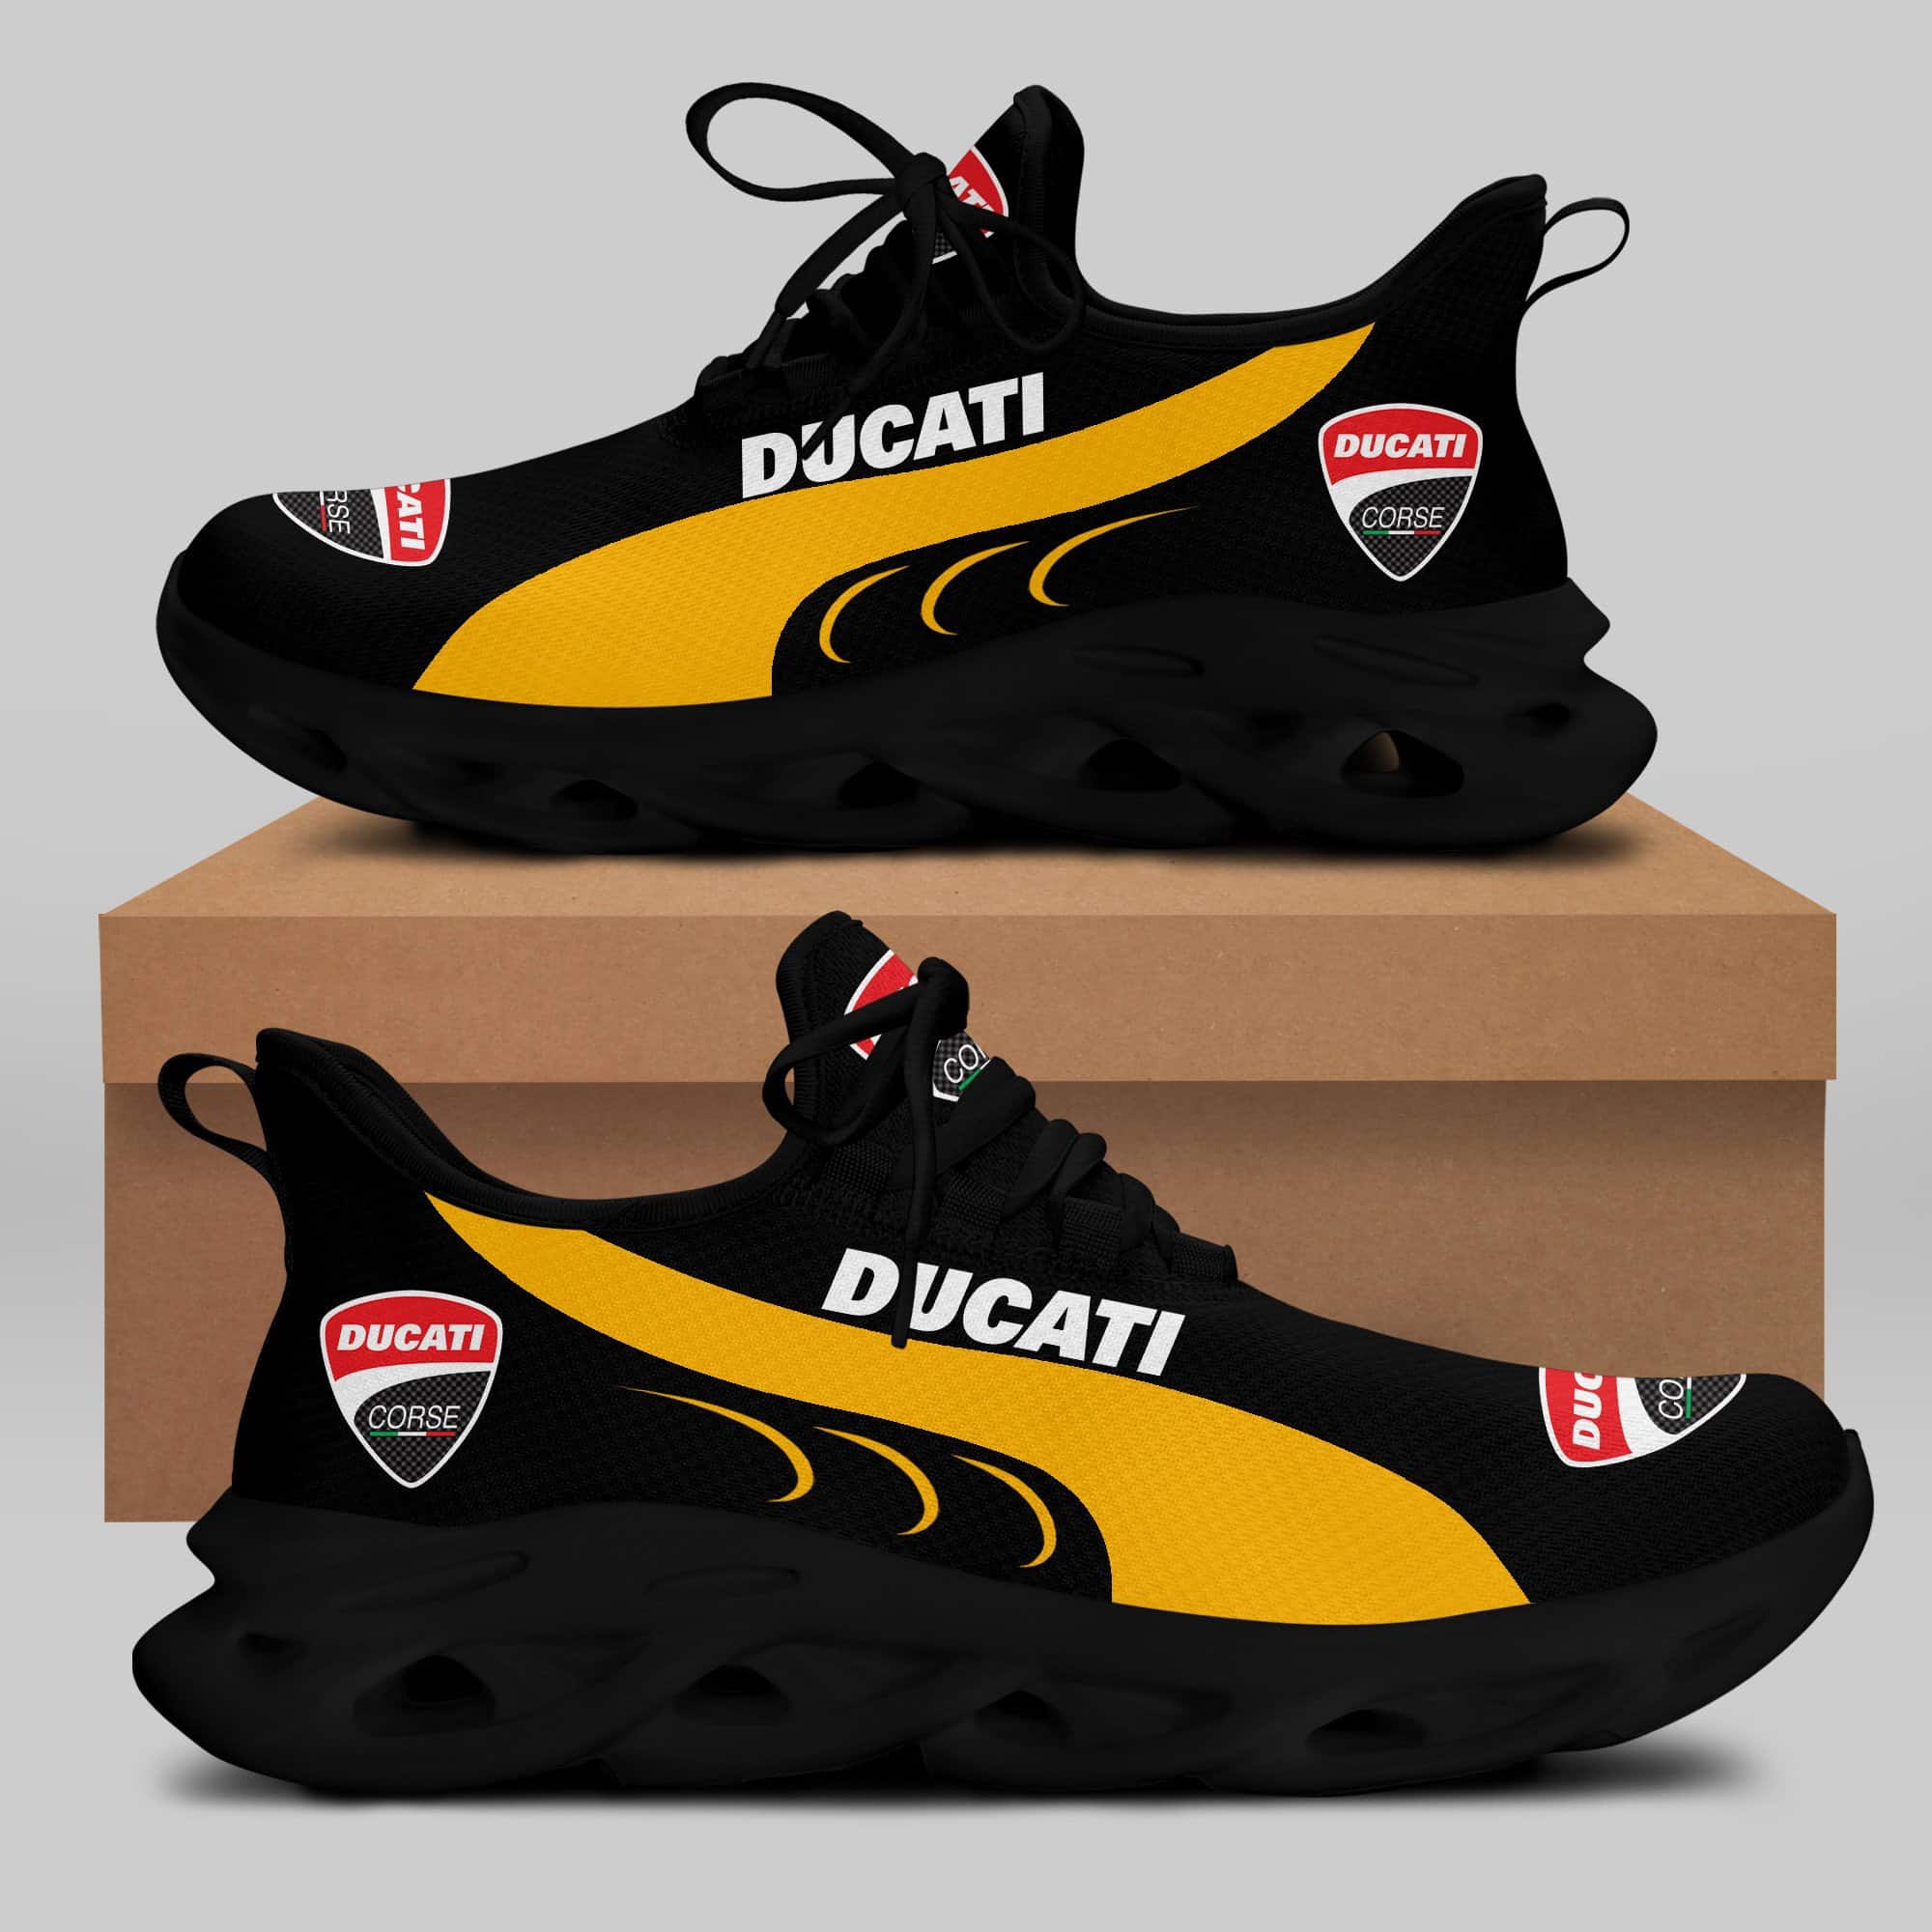 Ducati Racing Running Shoes Max Soul Shoes Sneakers Ver 60 1